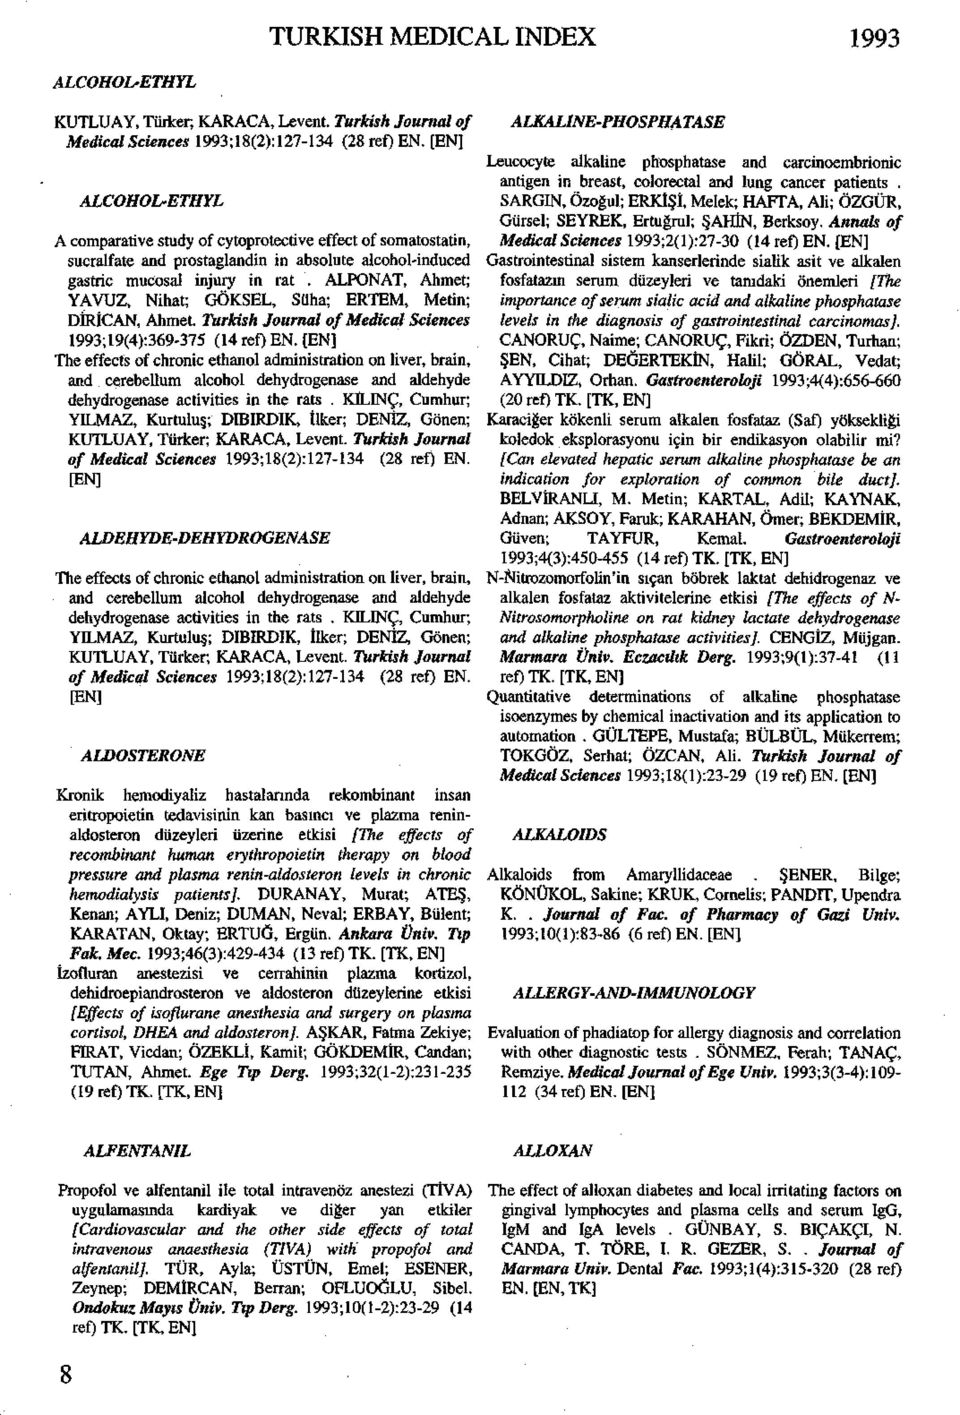 ALPONAT, Ahmet; YAVUZ, Nihat; GÖKSEL, Süha; ERTEM, Metin; DÎRİCAN, Ahmet. Turkish Journal of Medical Sciences 1993;19(4):369-375 (14 ref) EN.